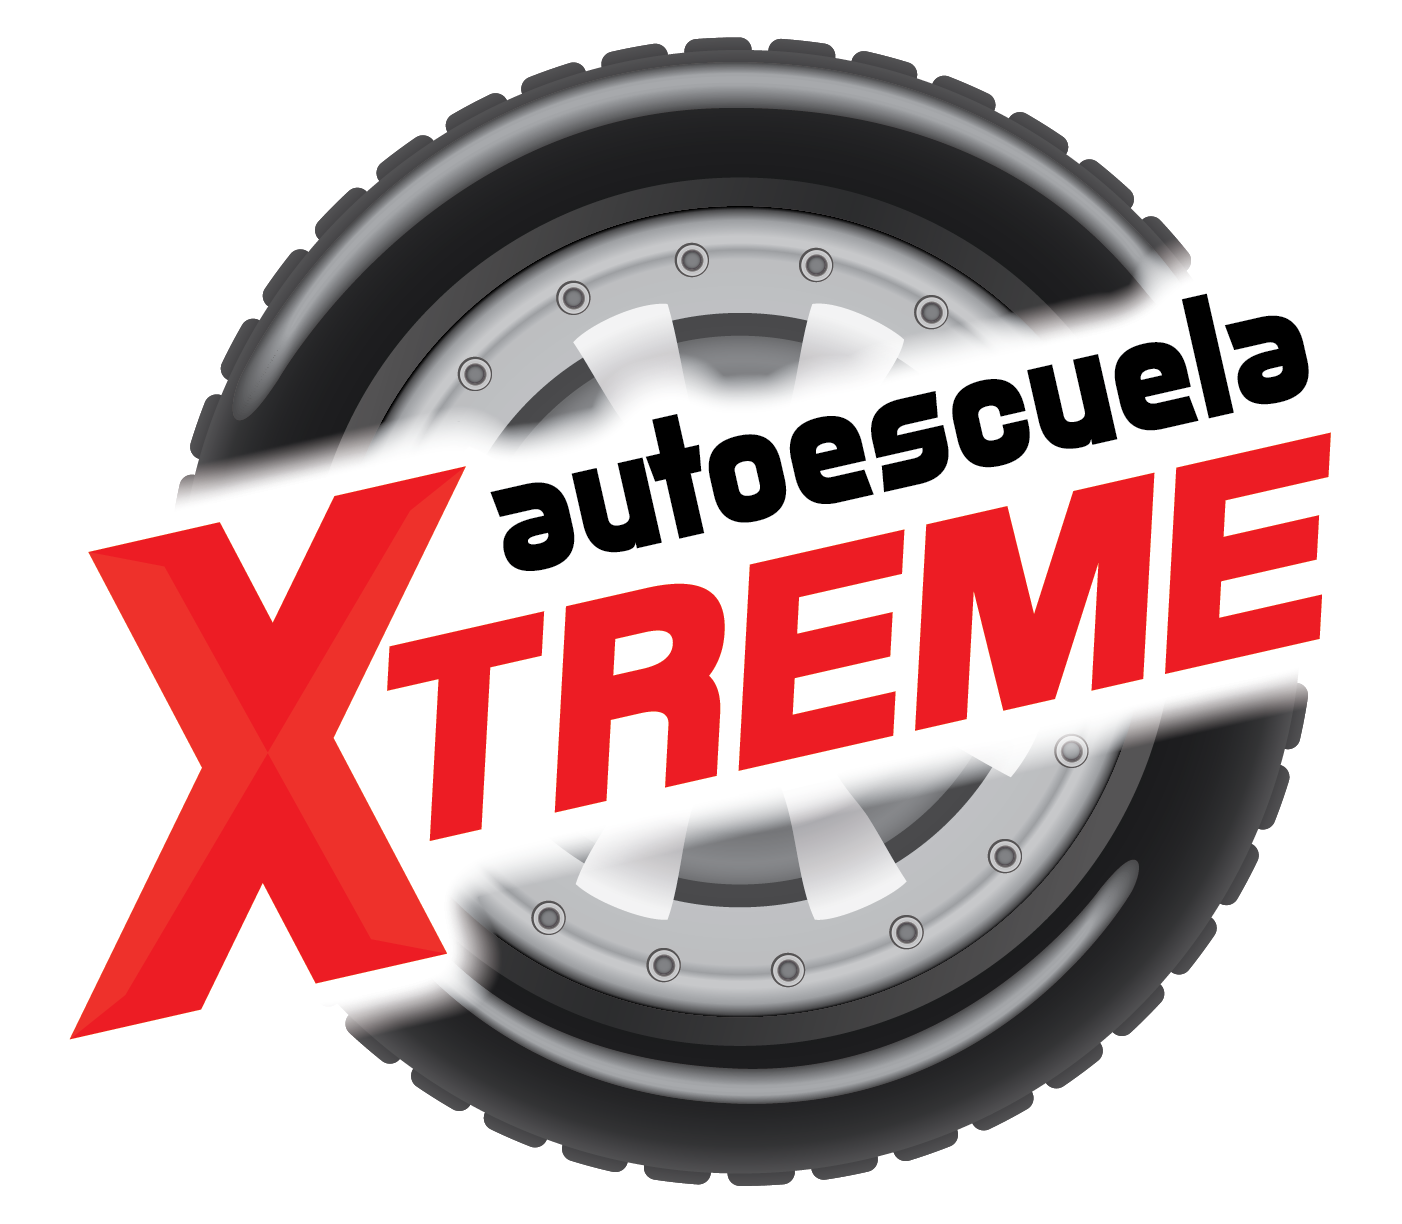 Autoescuela - Autoescuela Xtreme 